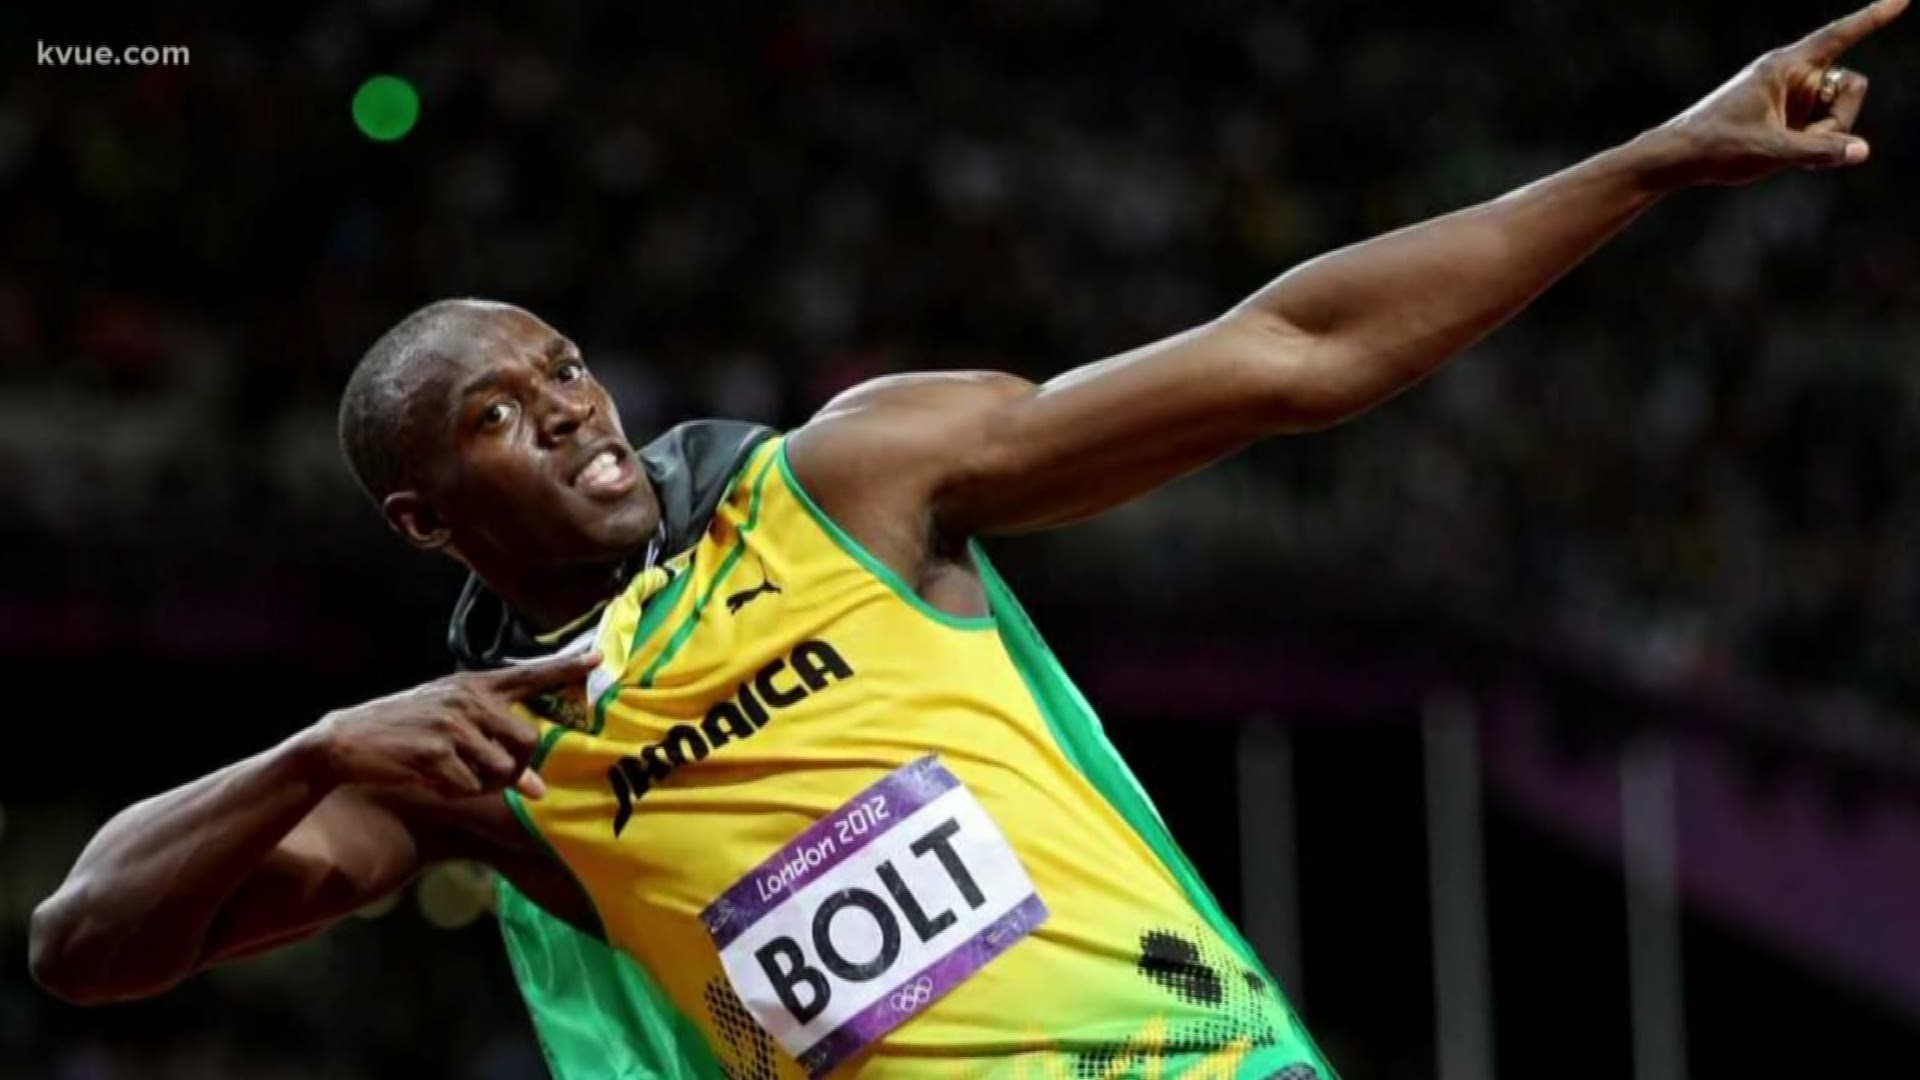 Usain Bolt in talks to join Austin soccer team